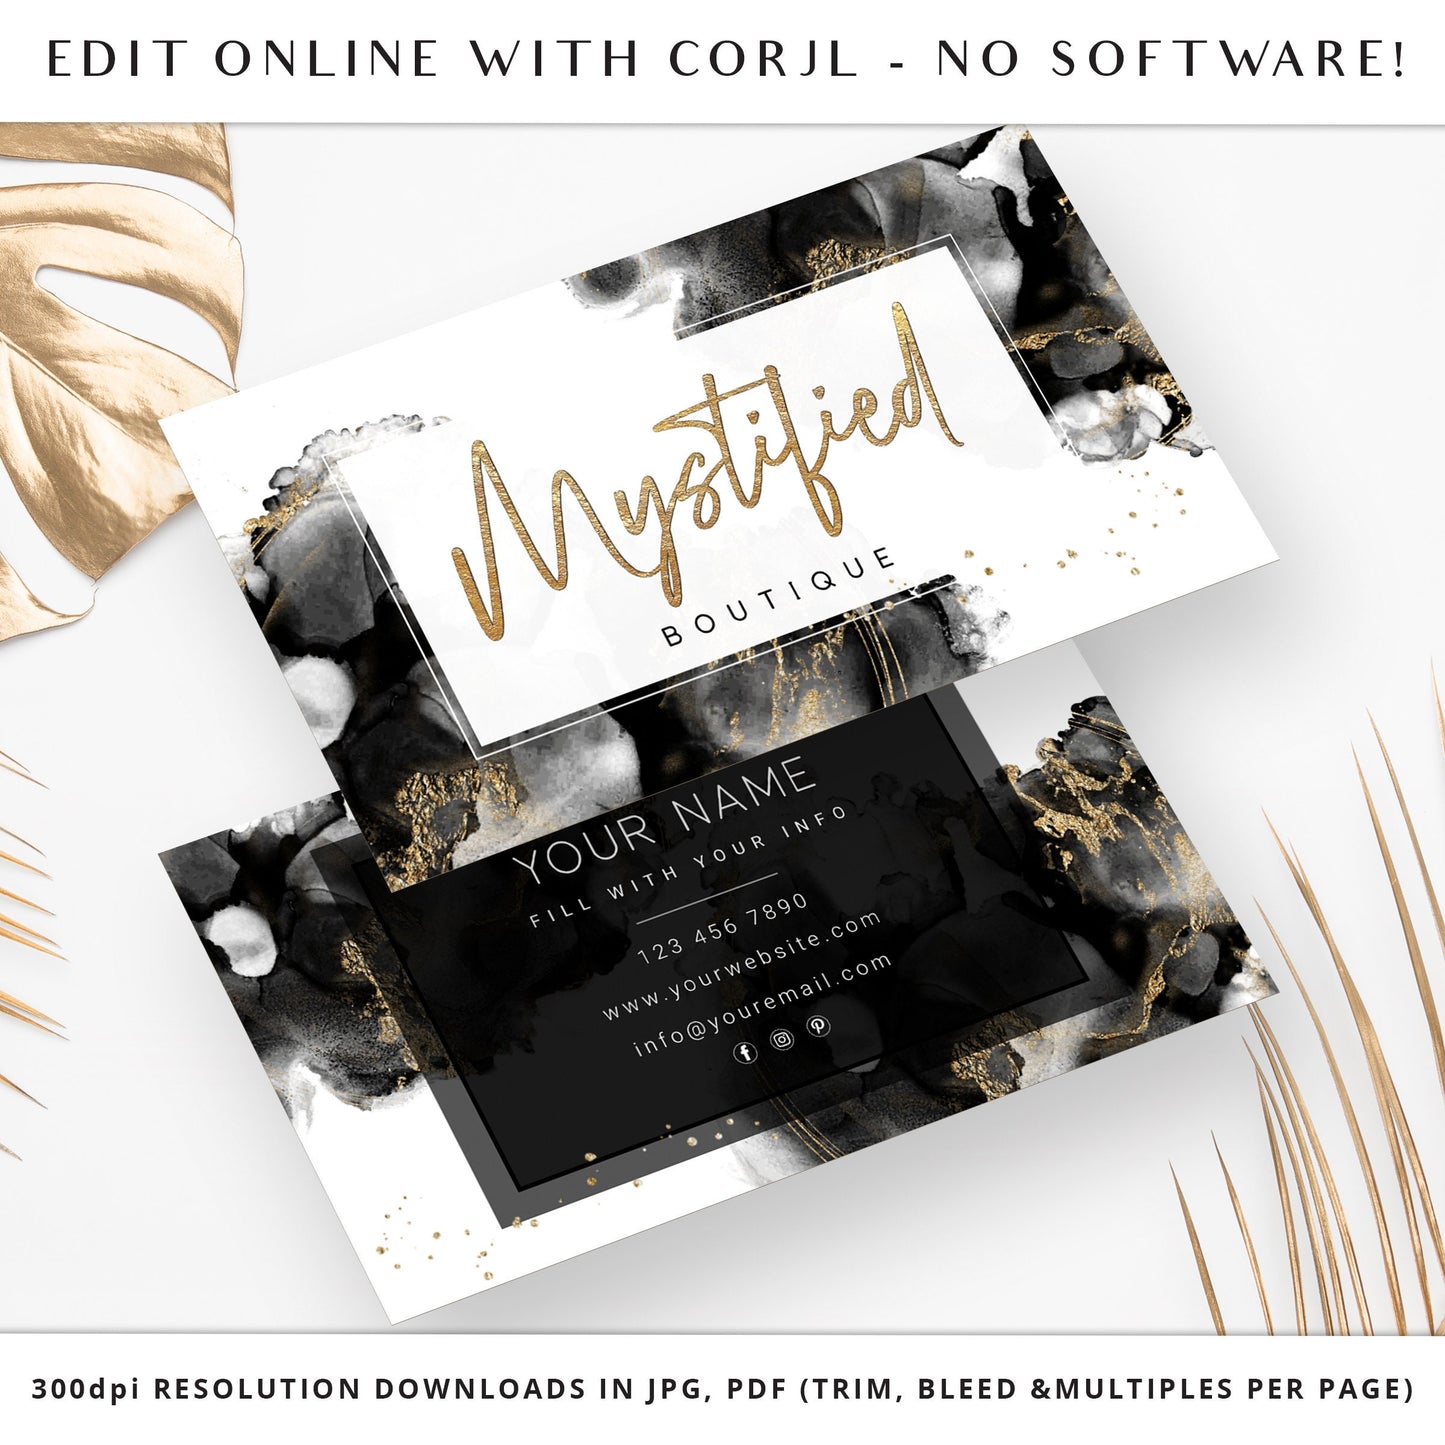 Editable Business Card Template, DIY Premade Black & Gold Glitter Marble Business Card, Beauty Business Card, Customizable Biz Card - MY-001